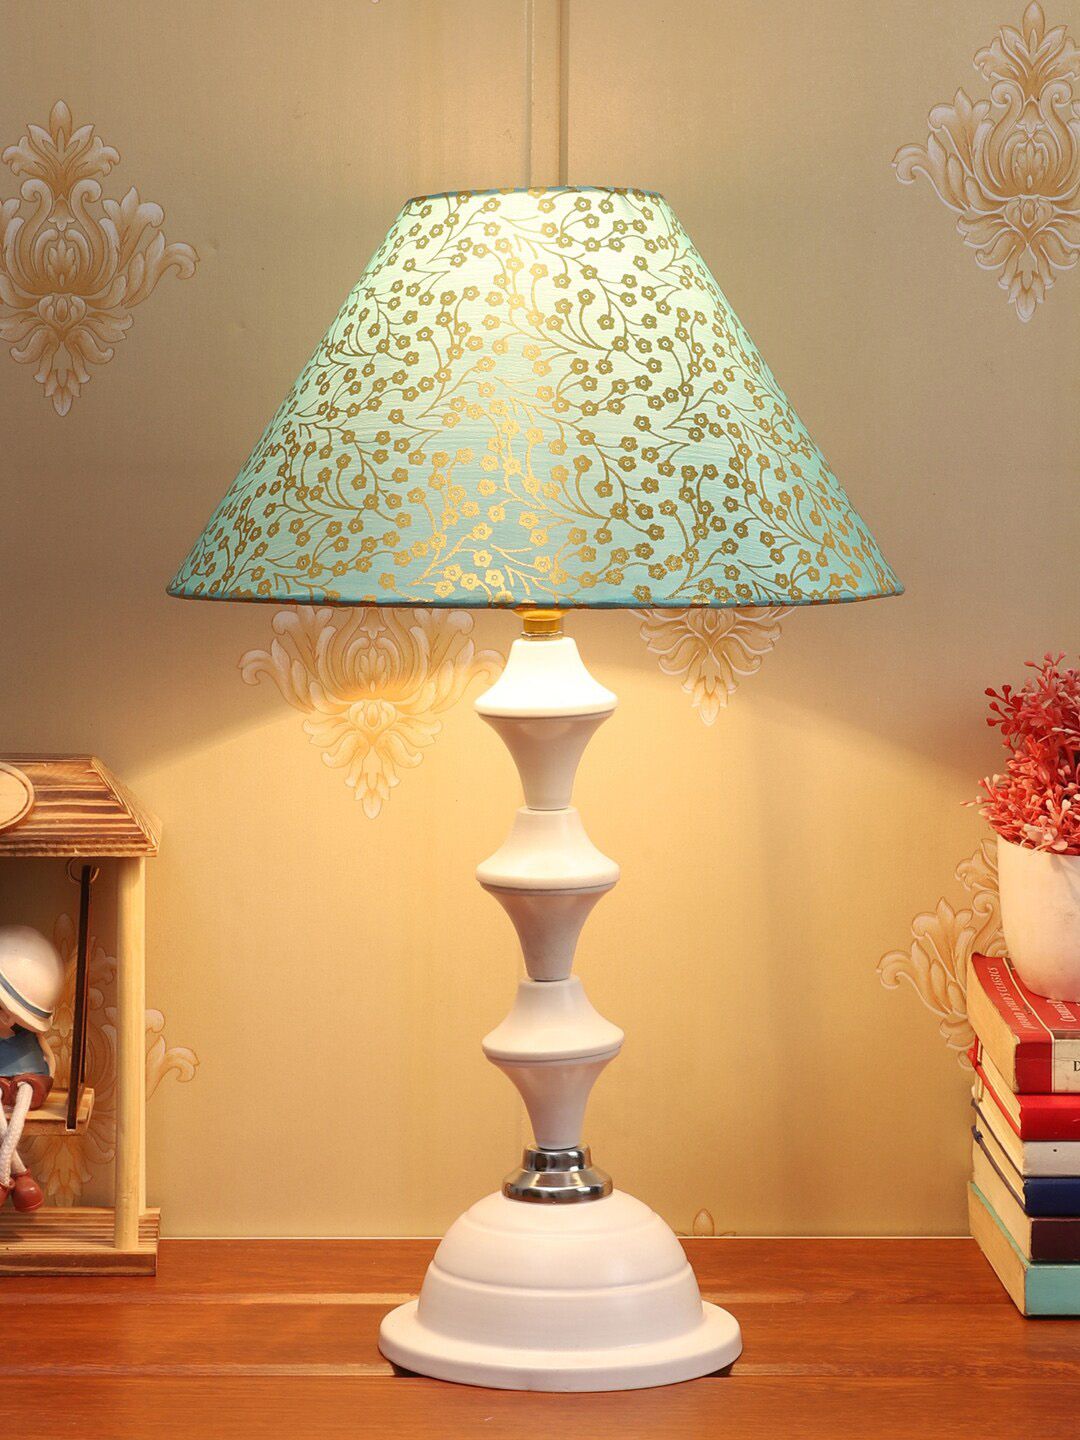 Foziq Blue & White Printed Metal Table Lamp Price in India